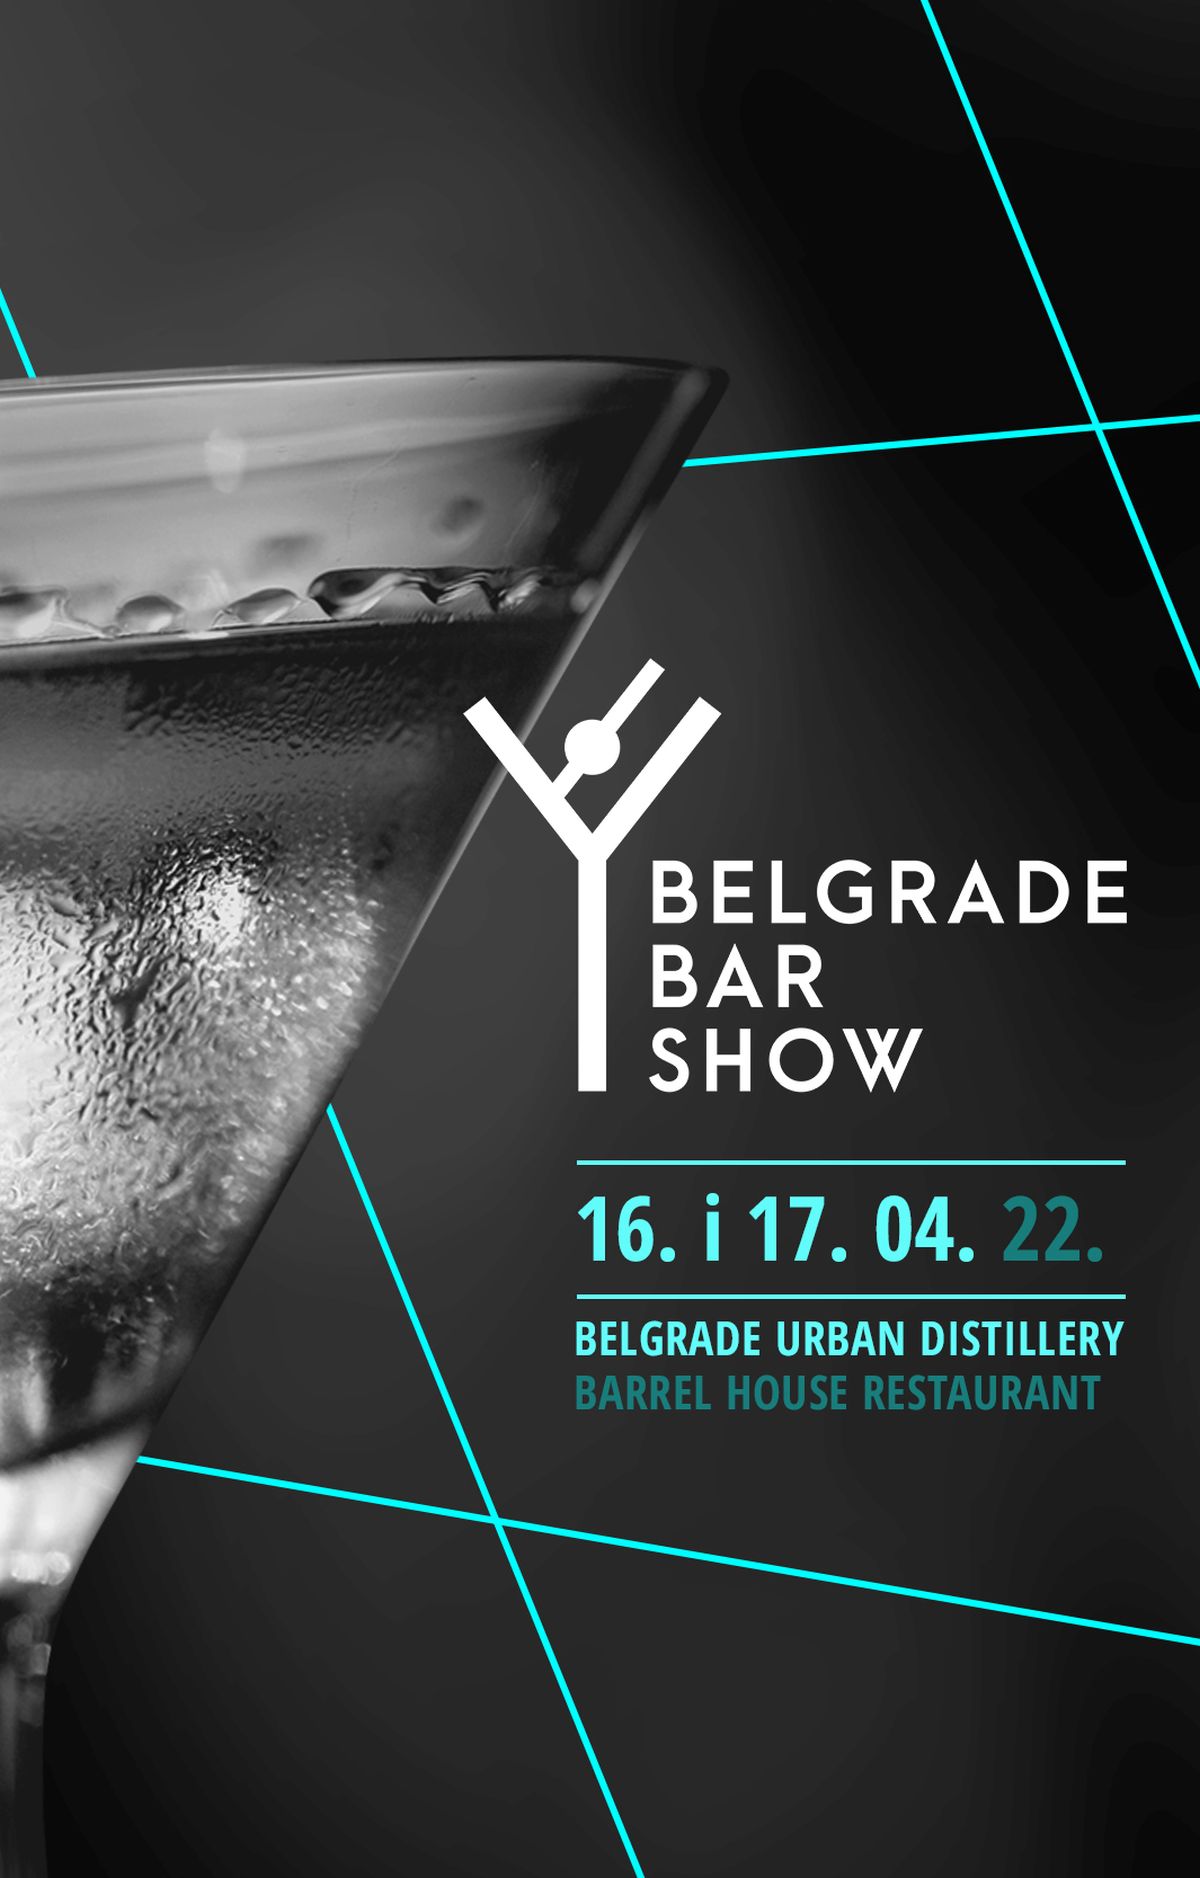 2 Belgrade bar show